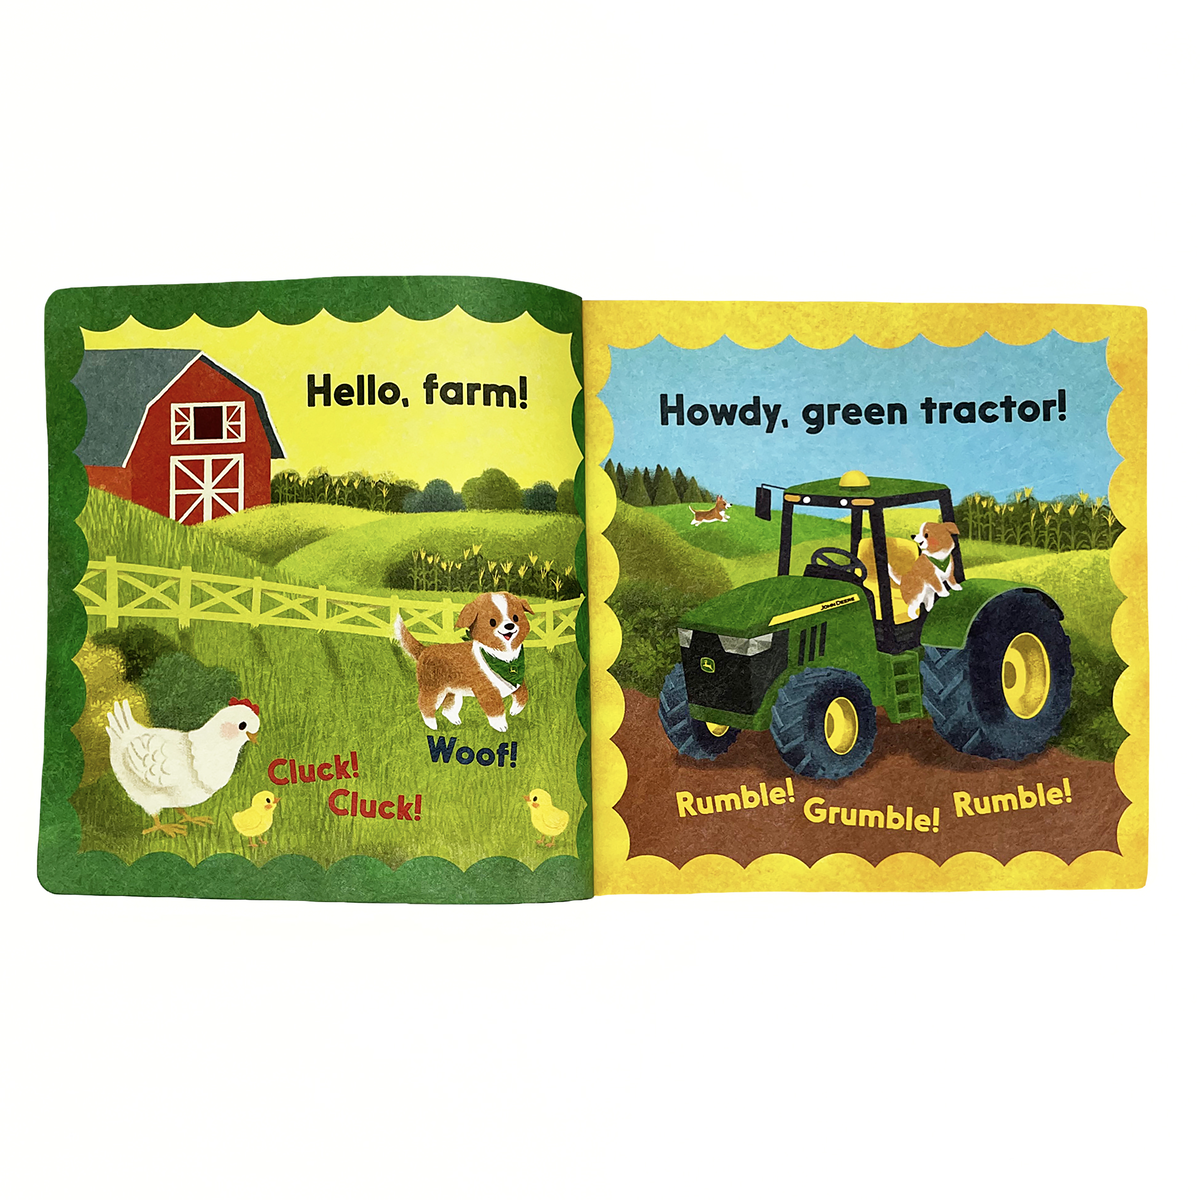 John Deere Kids Hello, Farm!  (A Tuffy Book)